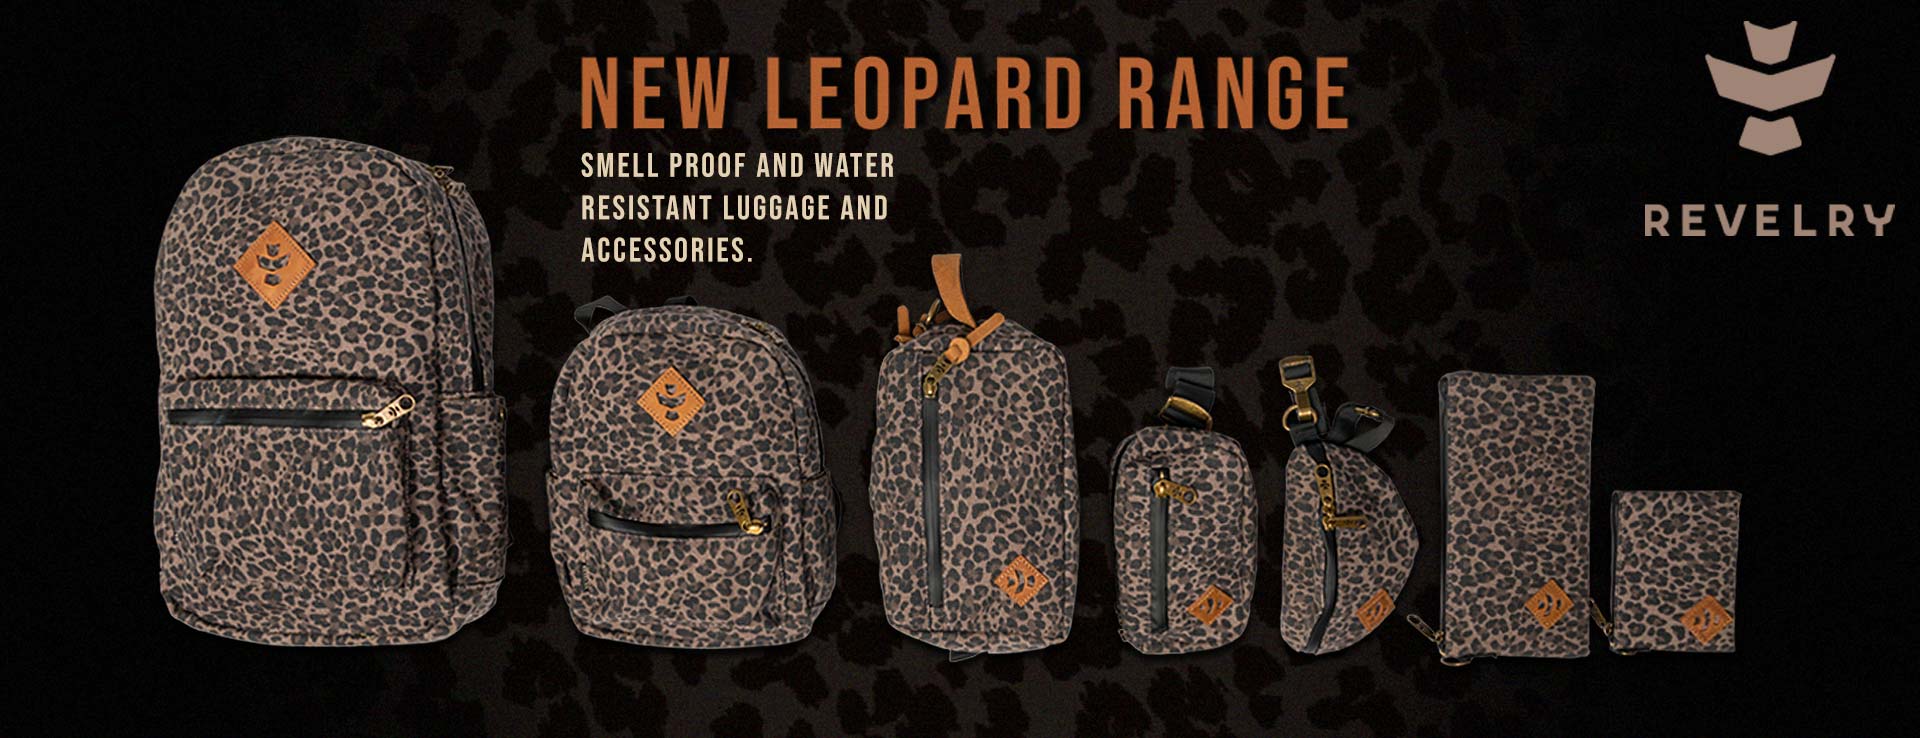 Revelry Bag Leopard Print